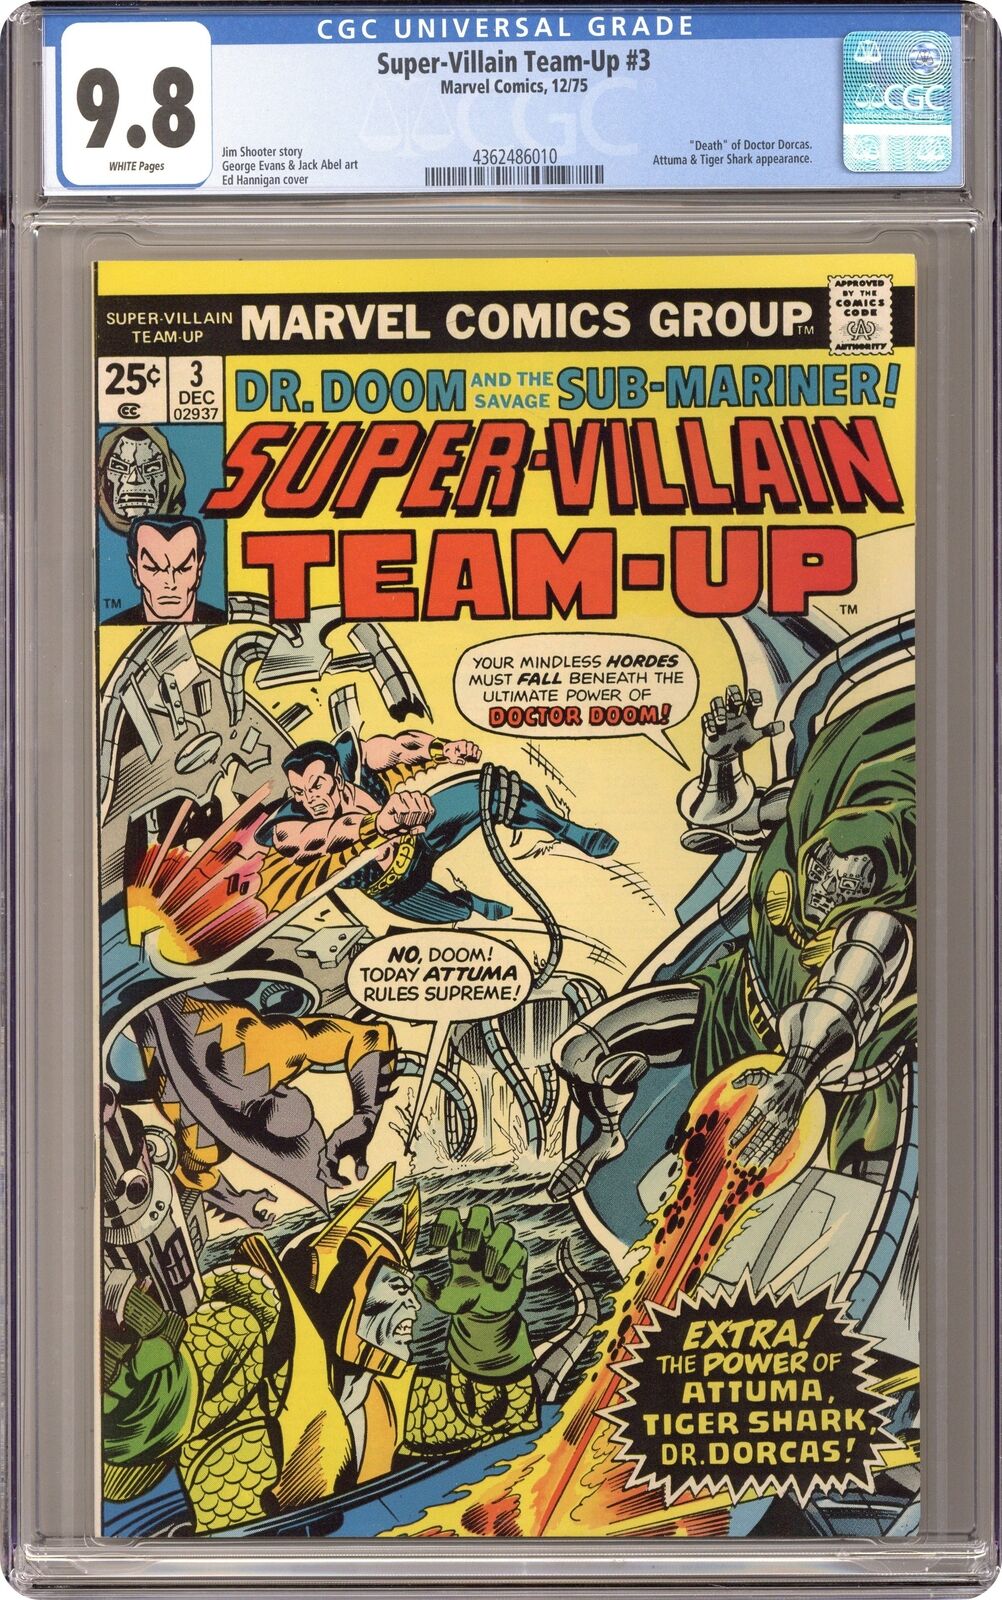 Super-Villain Team-Up #3 CGC 9.8 1975 4362486010